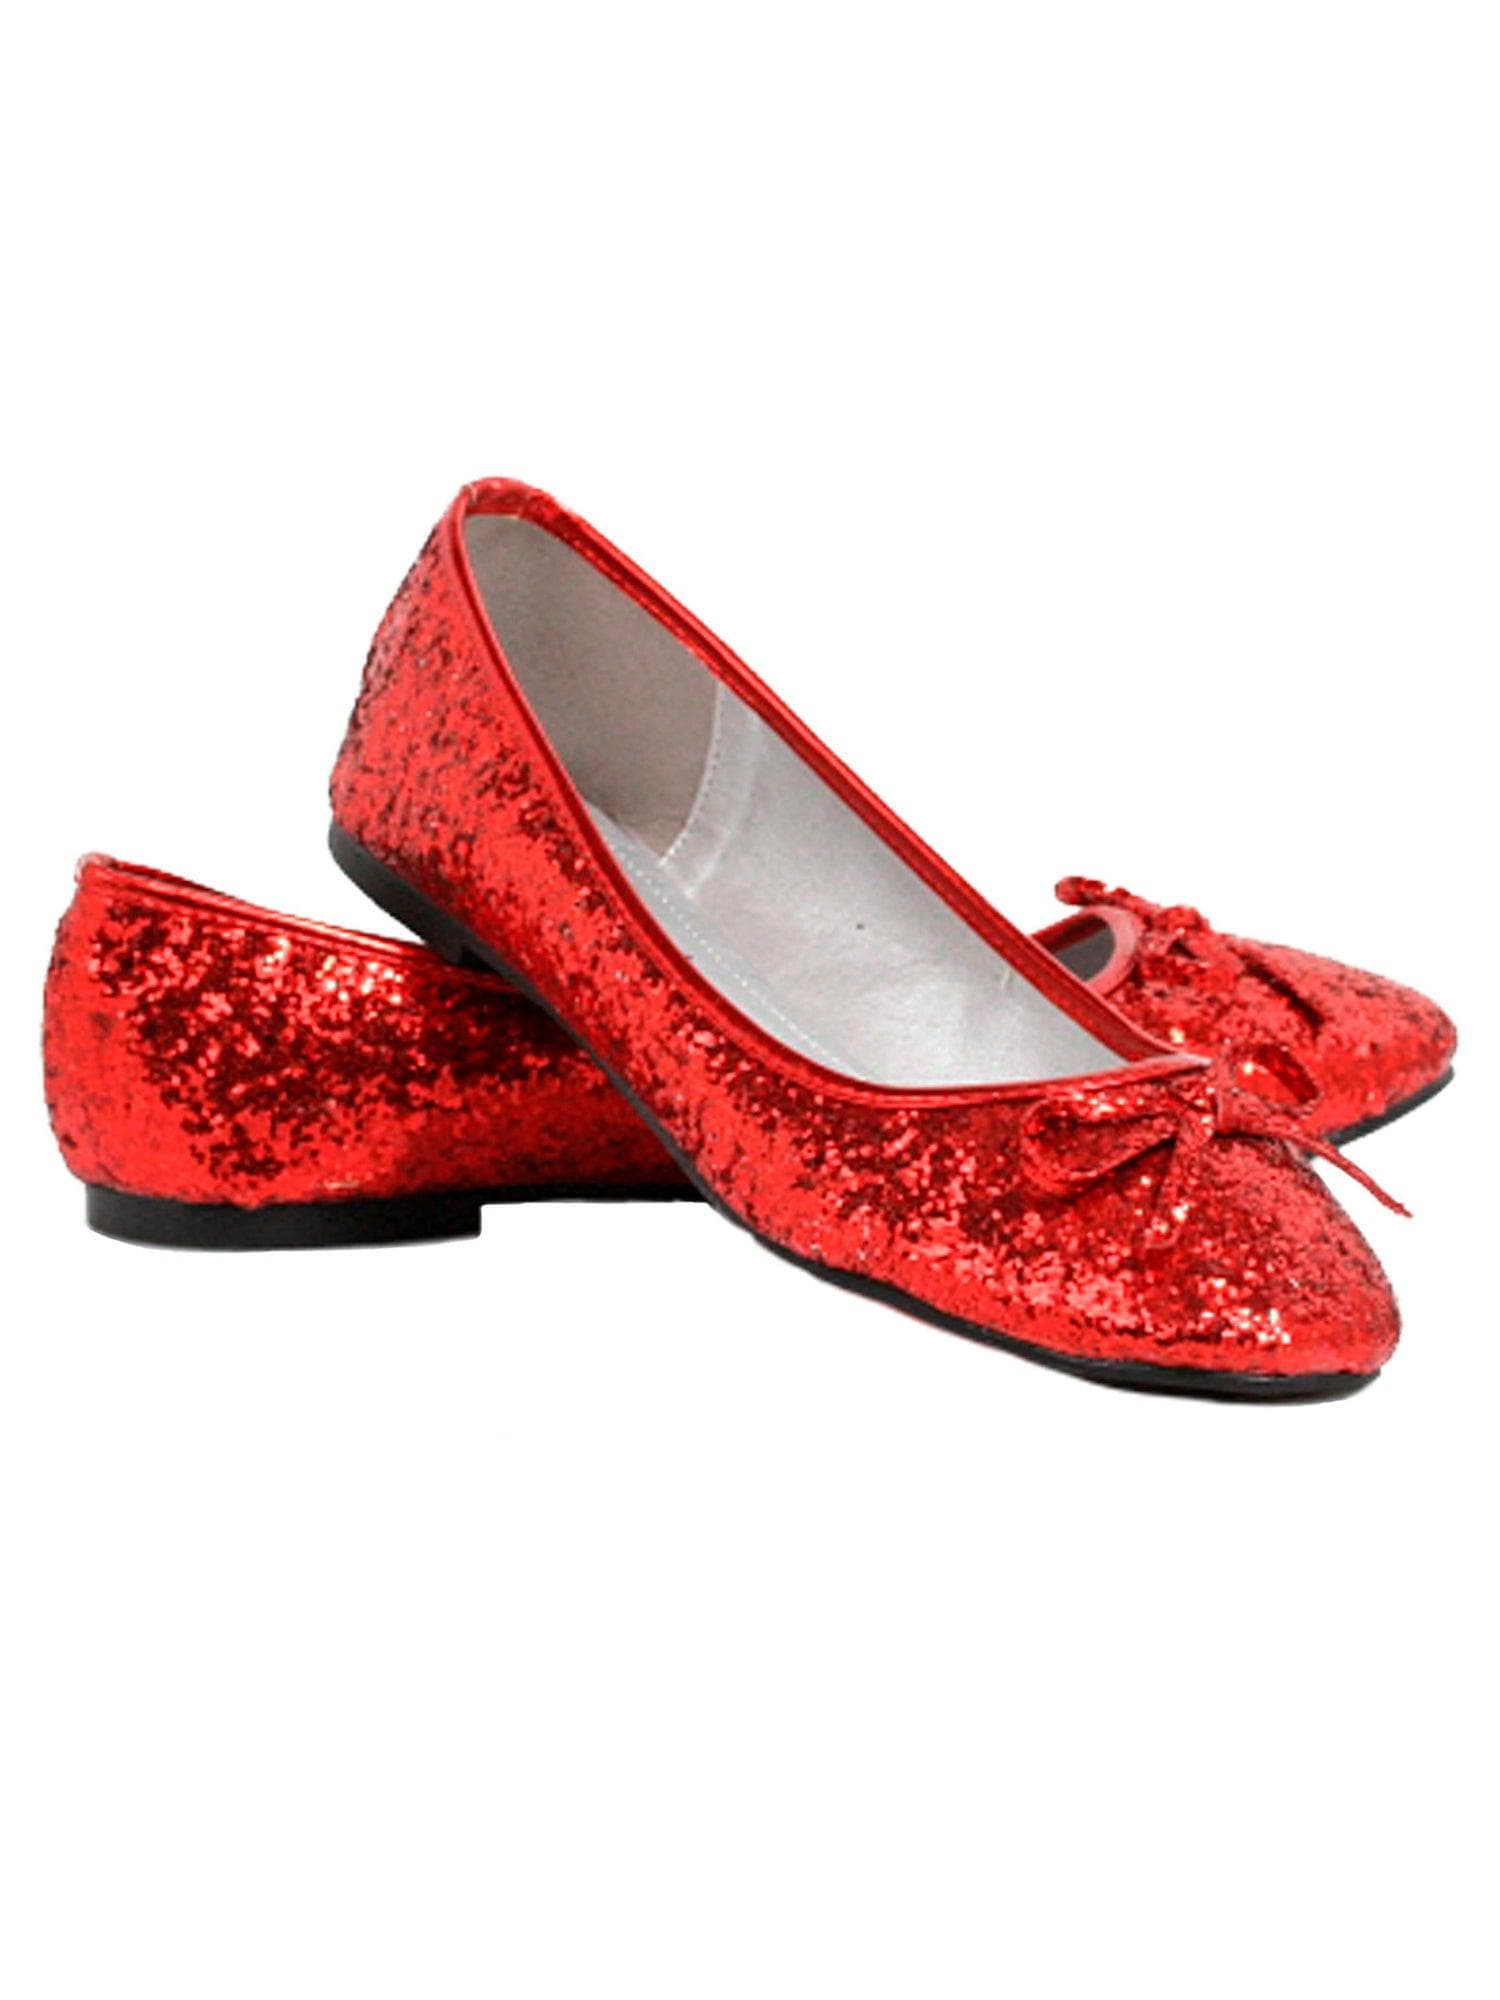 Adult Red Sparkle Ballet Shoes - costumes.com